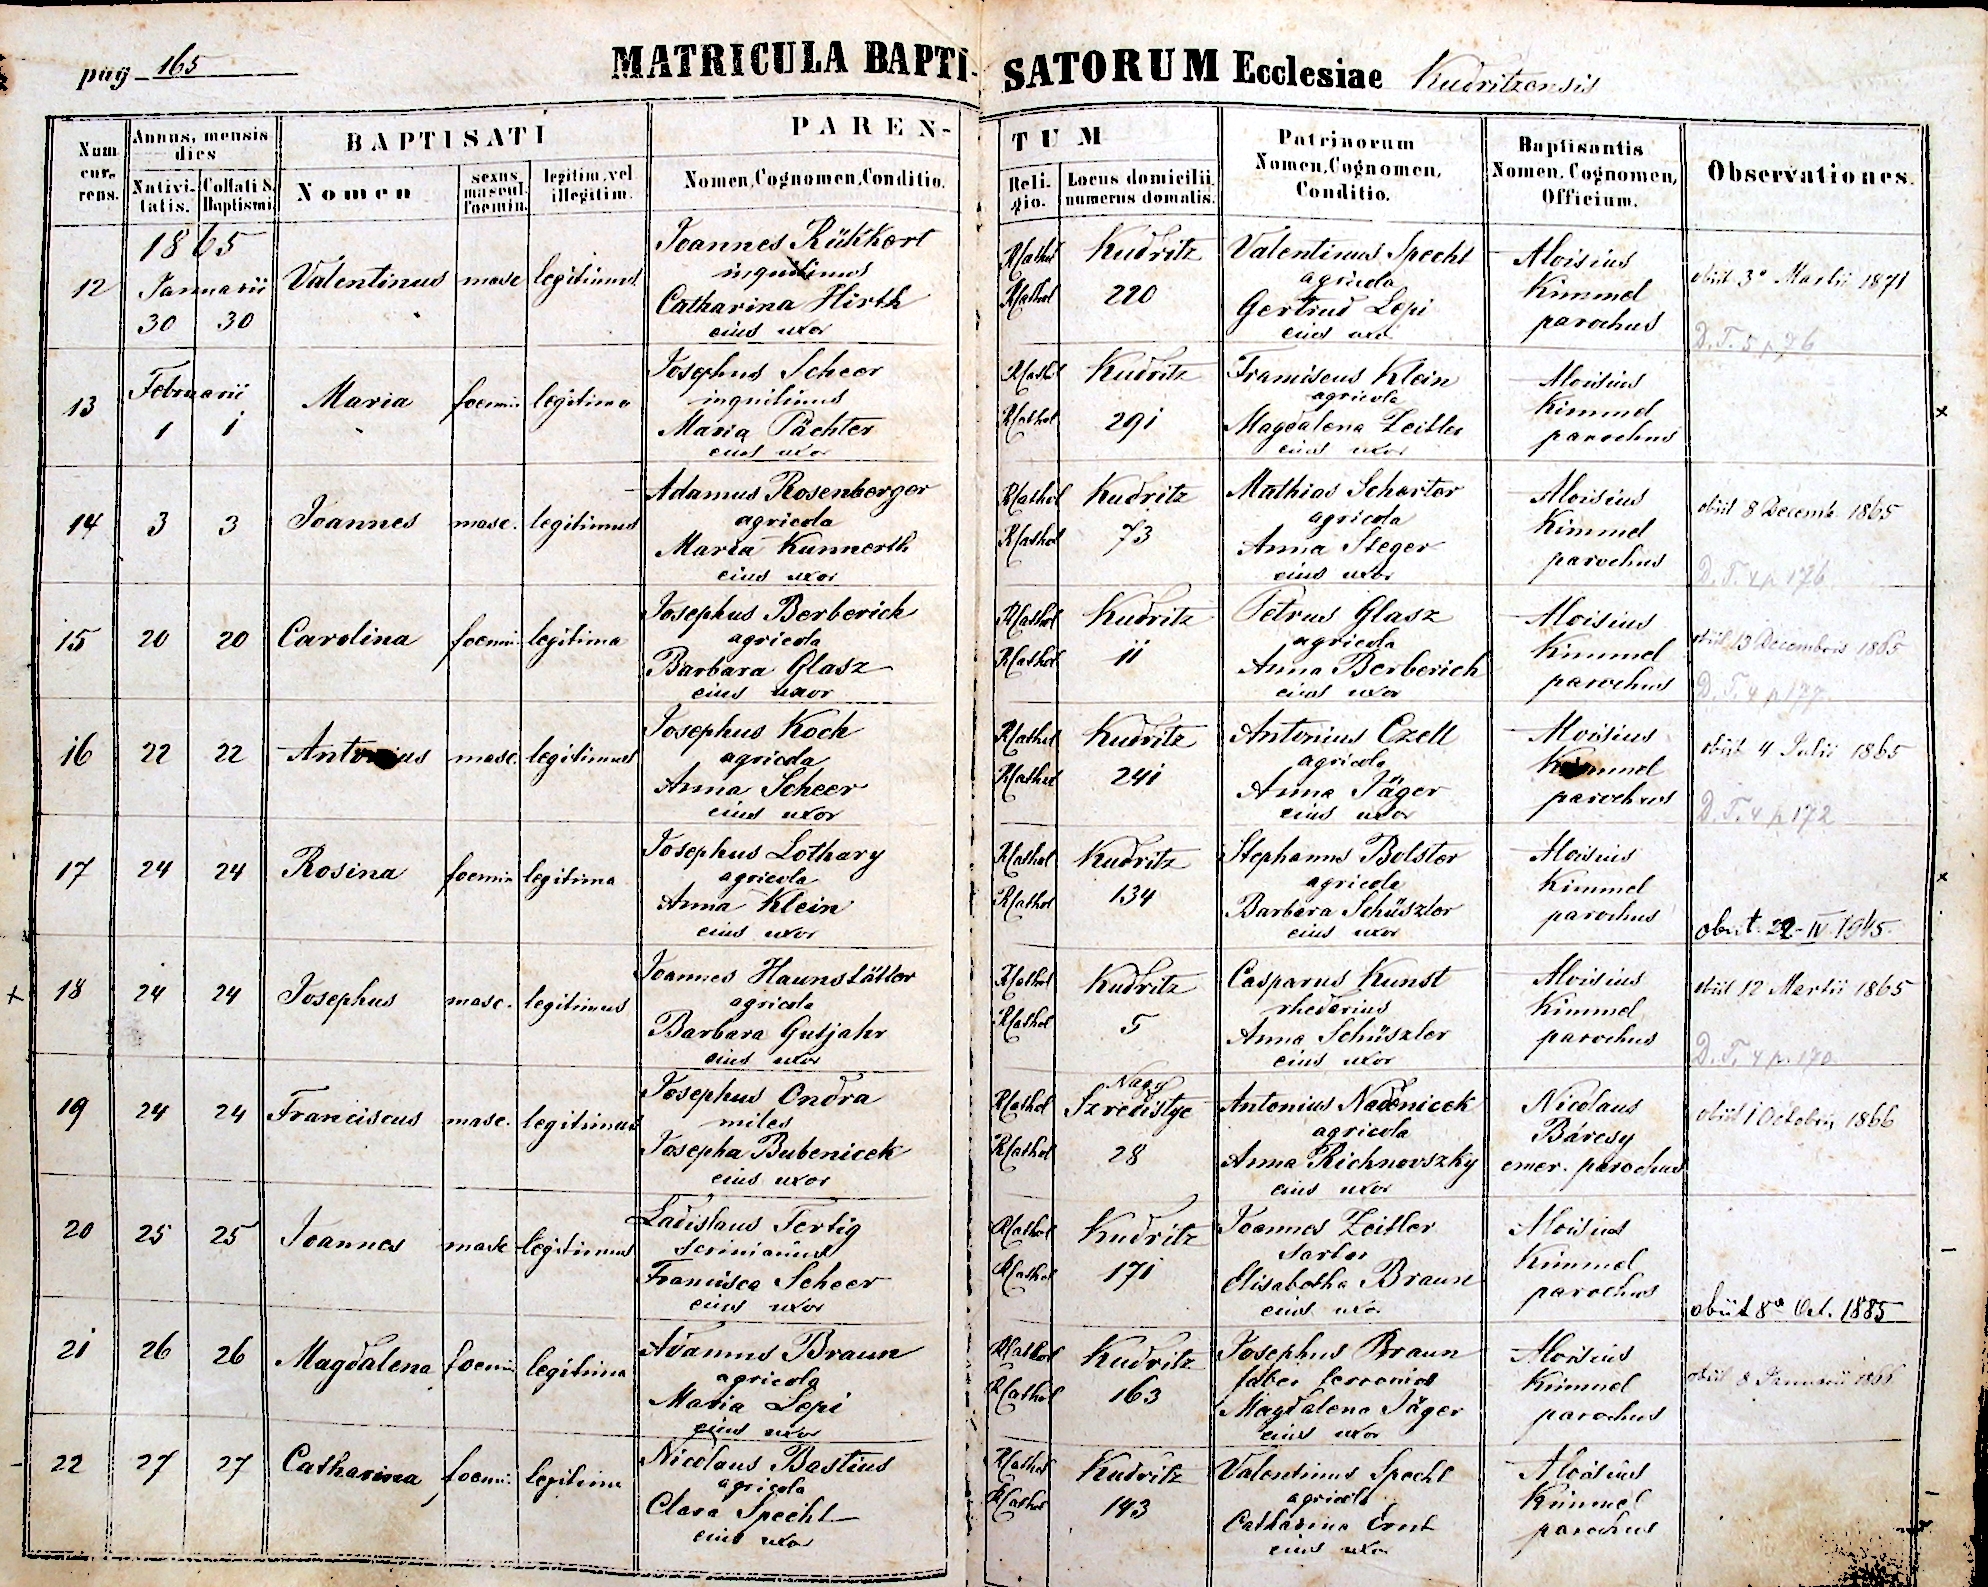 images/church_records/BIRTHS/1852-1870B/165